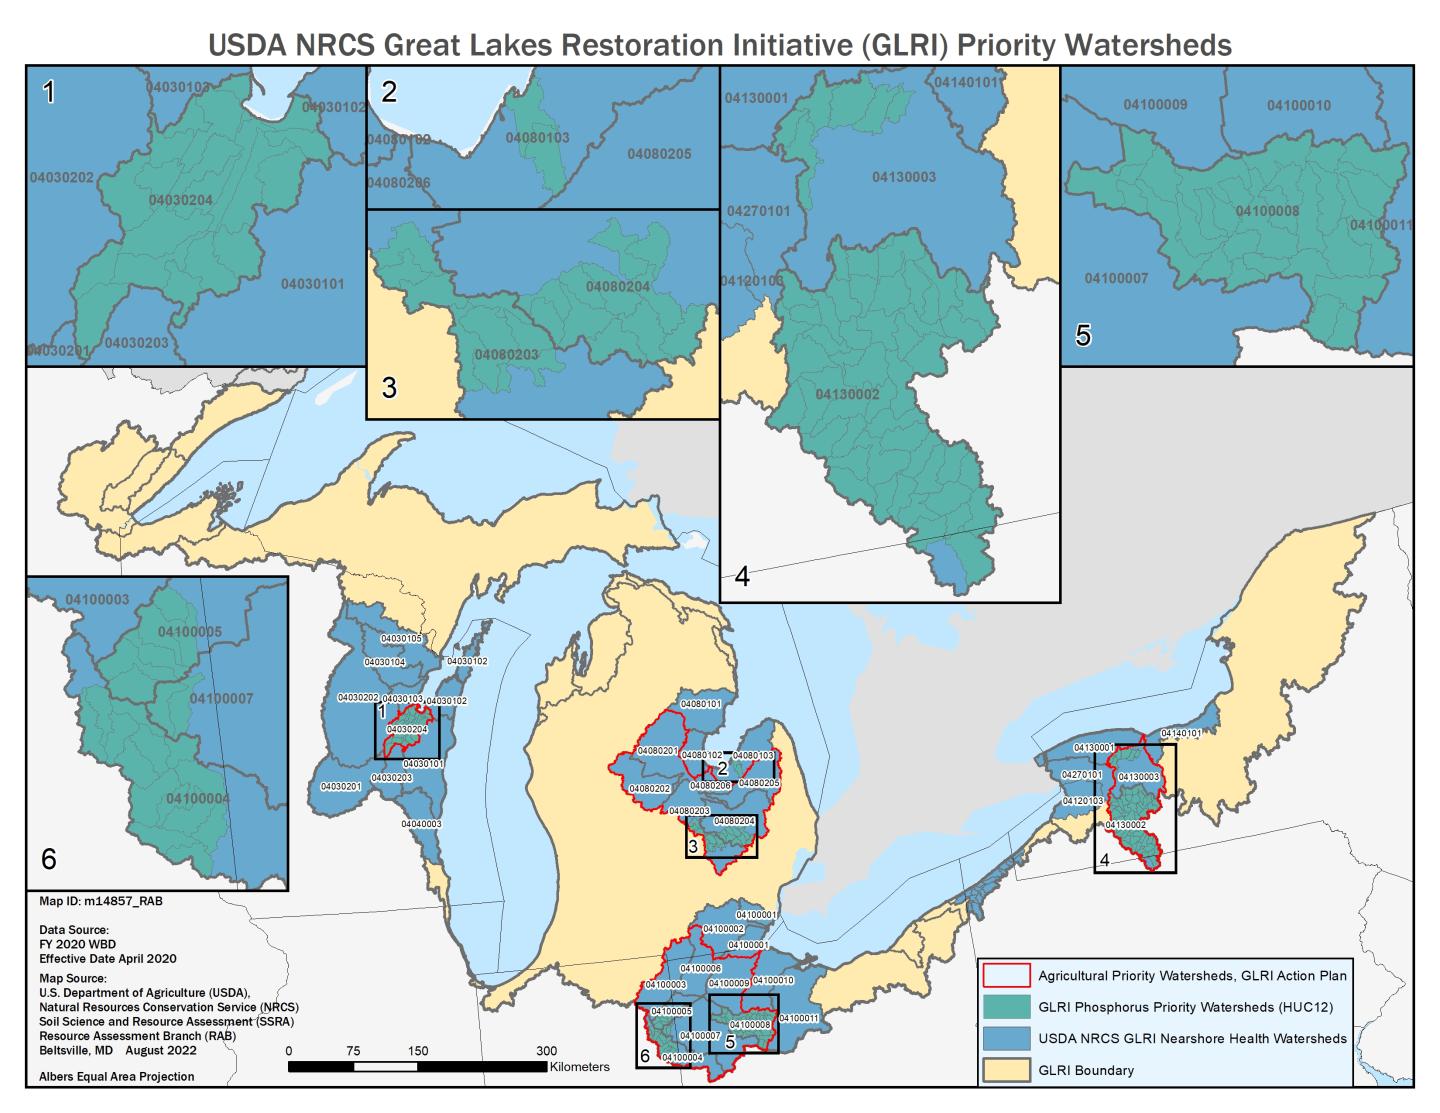 USDA NRCS Great Lakes Restoration Initiative (GLRI) Priority Watersheds Detailed Map